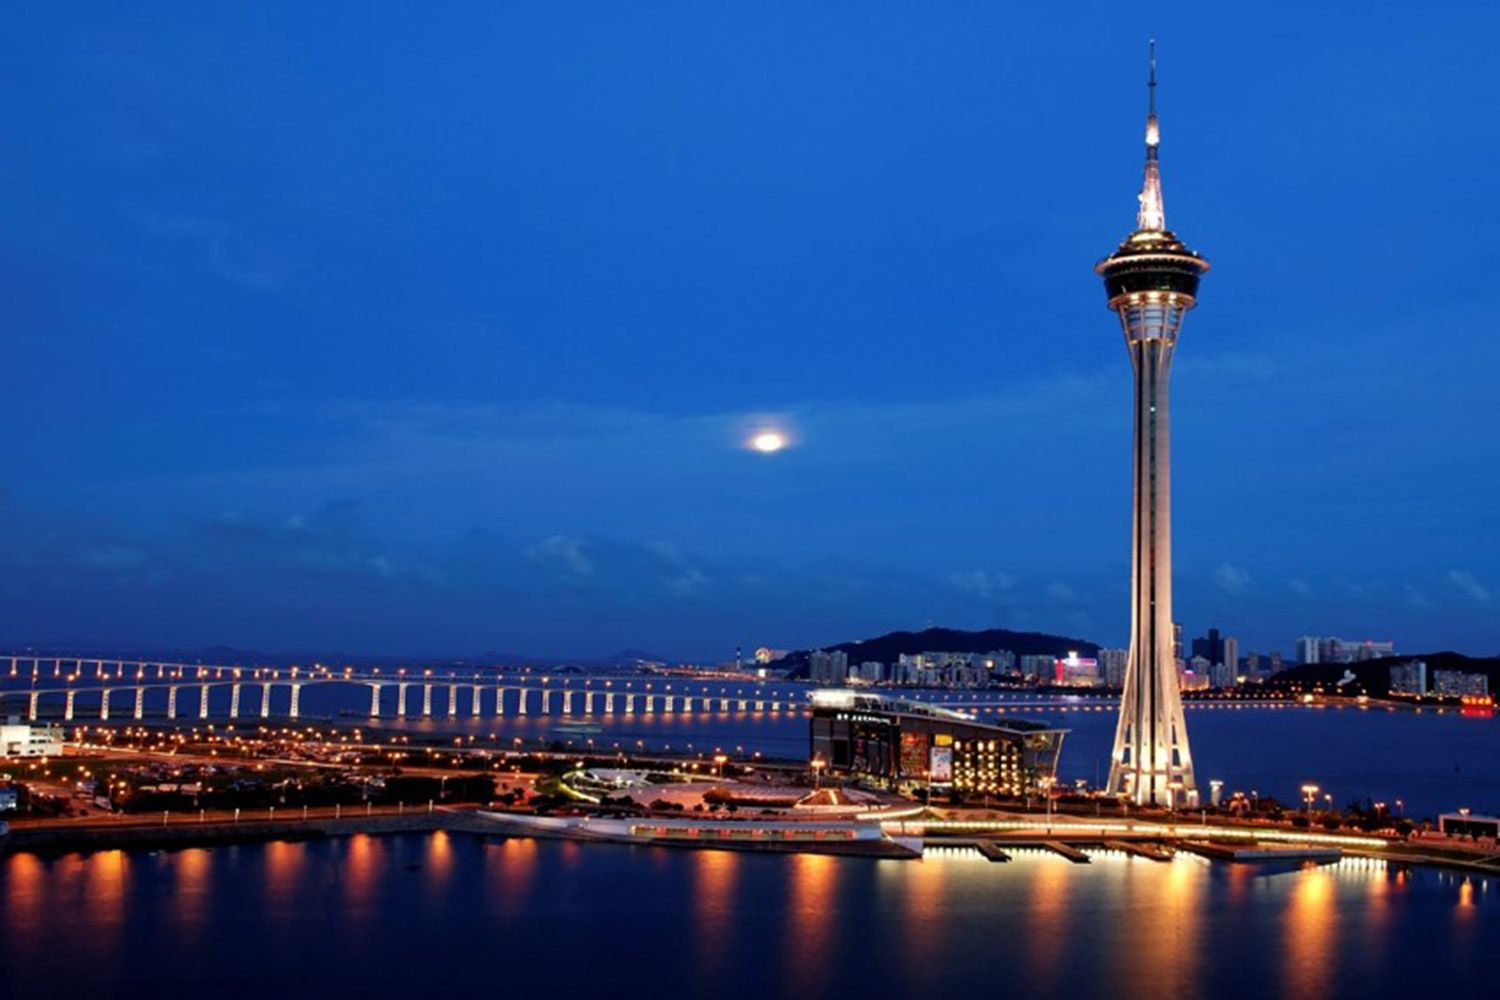 Night view of Macau Tower